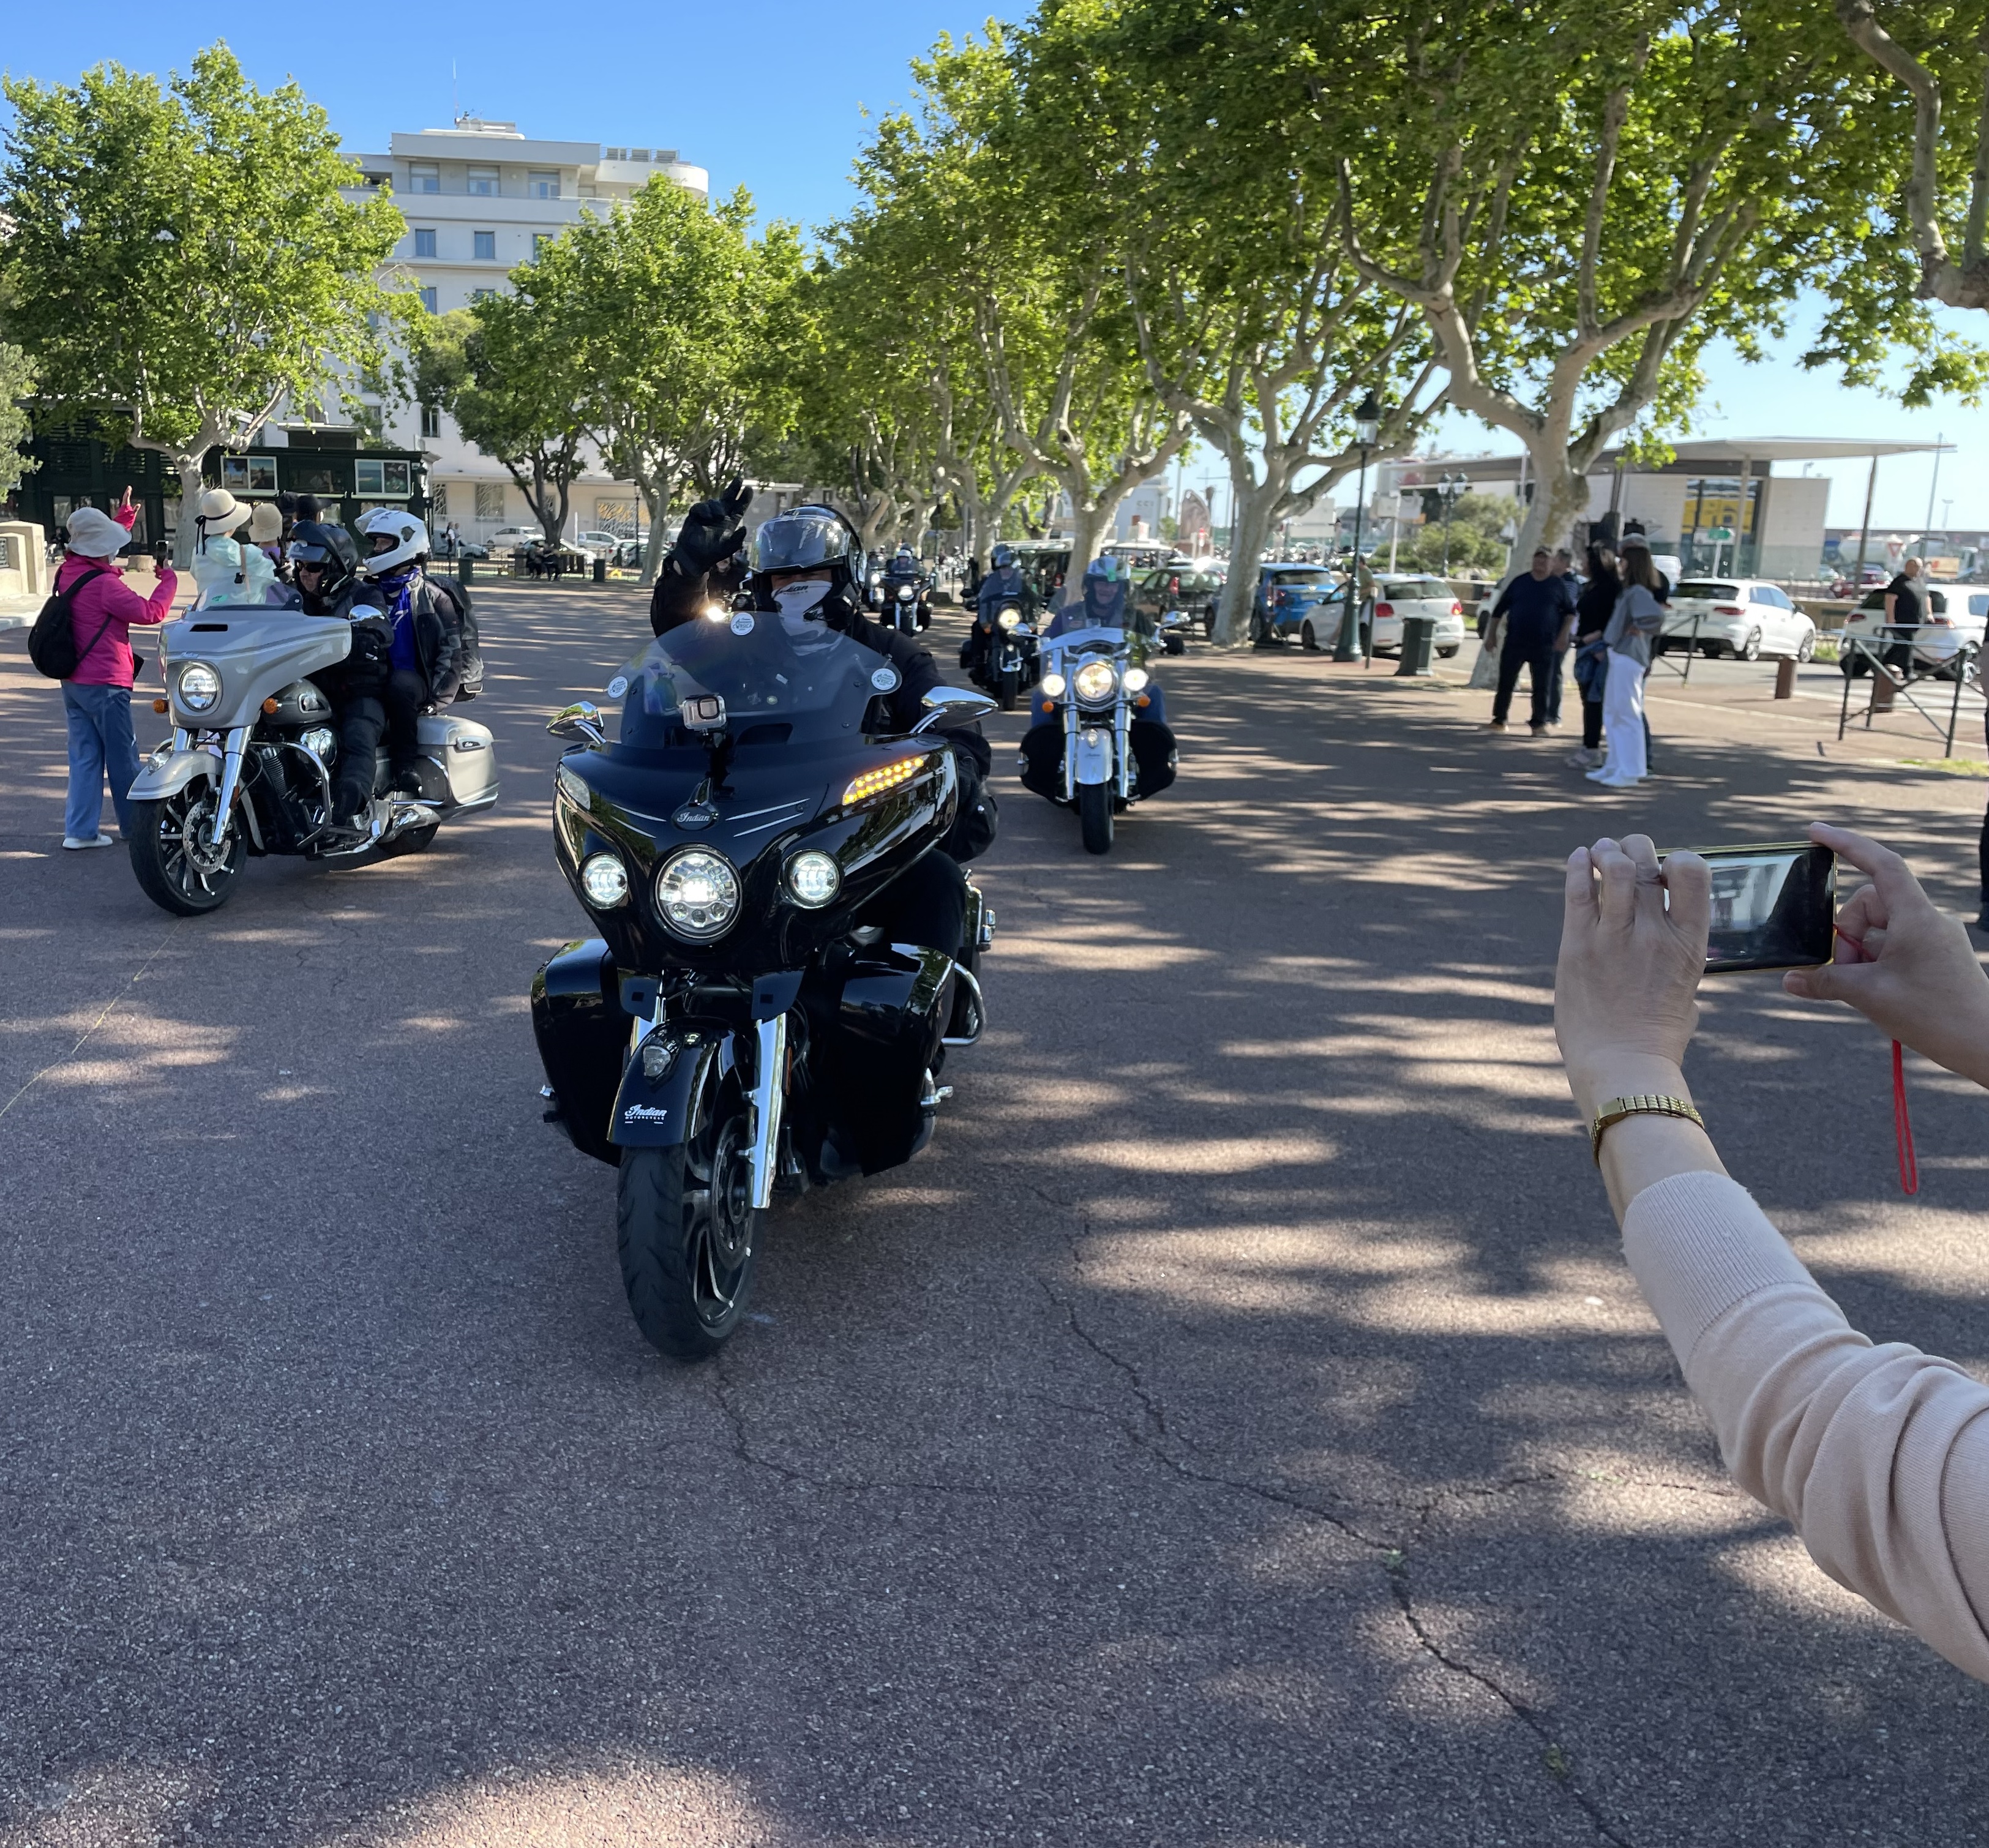 Corsica Indian 2024 : 250 motards sillonnent les routes insulaires